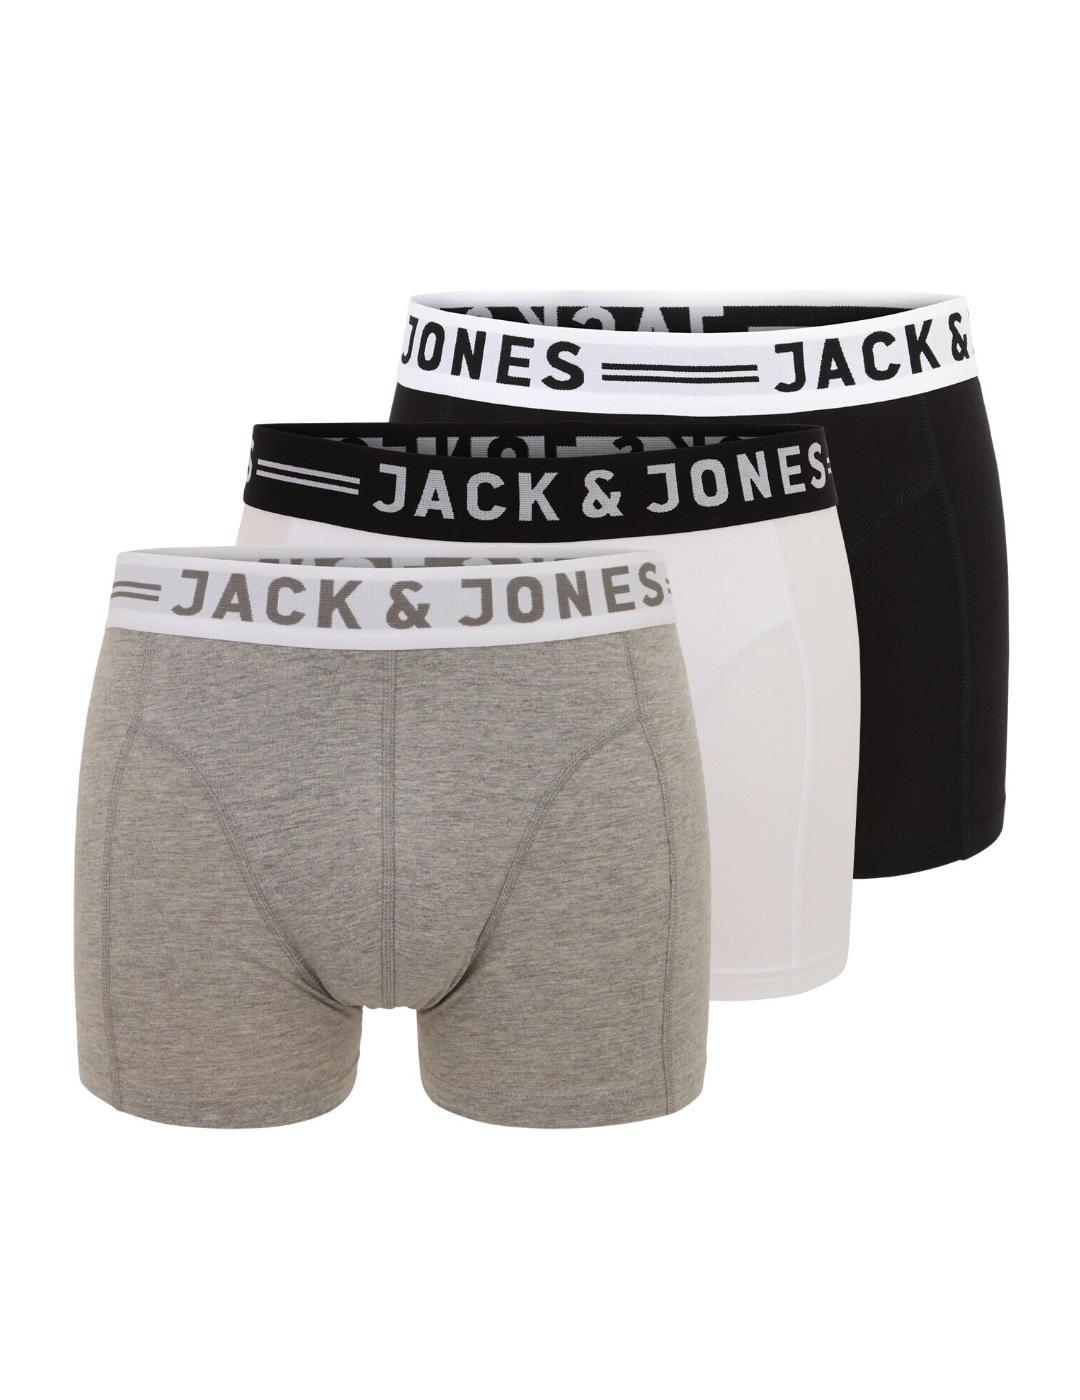 Intimo Jack/df01Jones Sense pack3 gris/negro/blanco para hombre